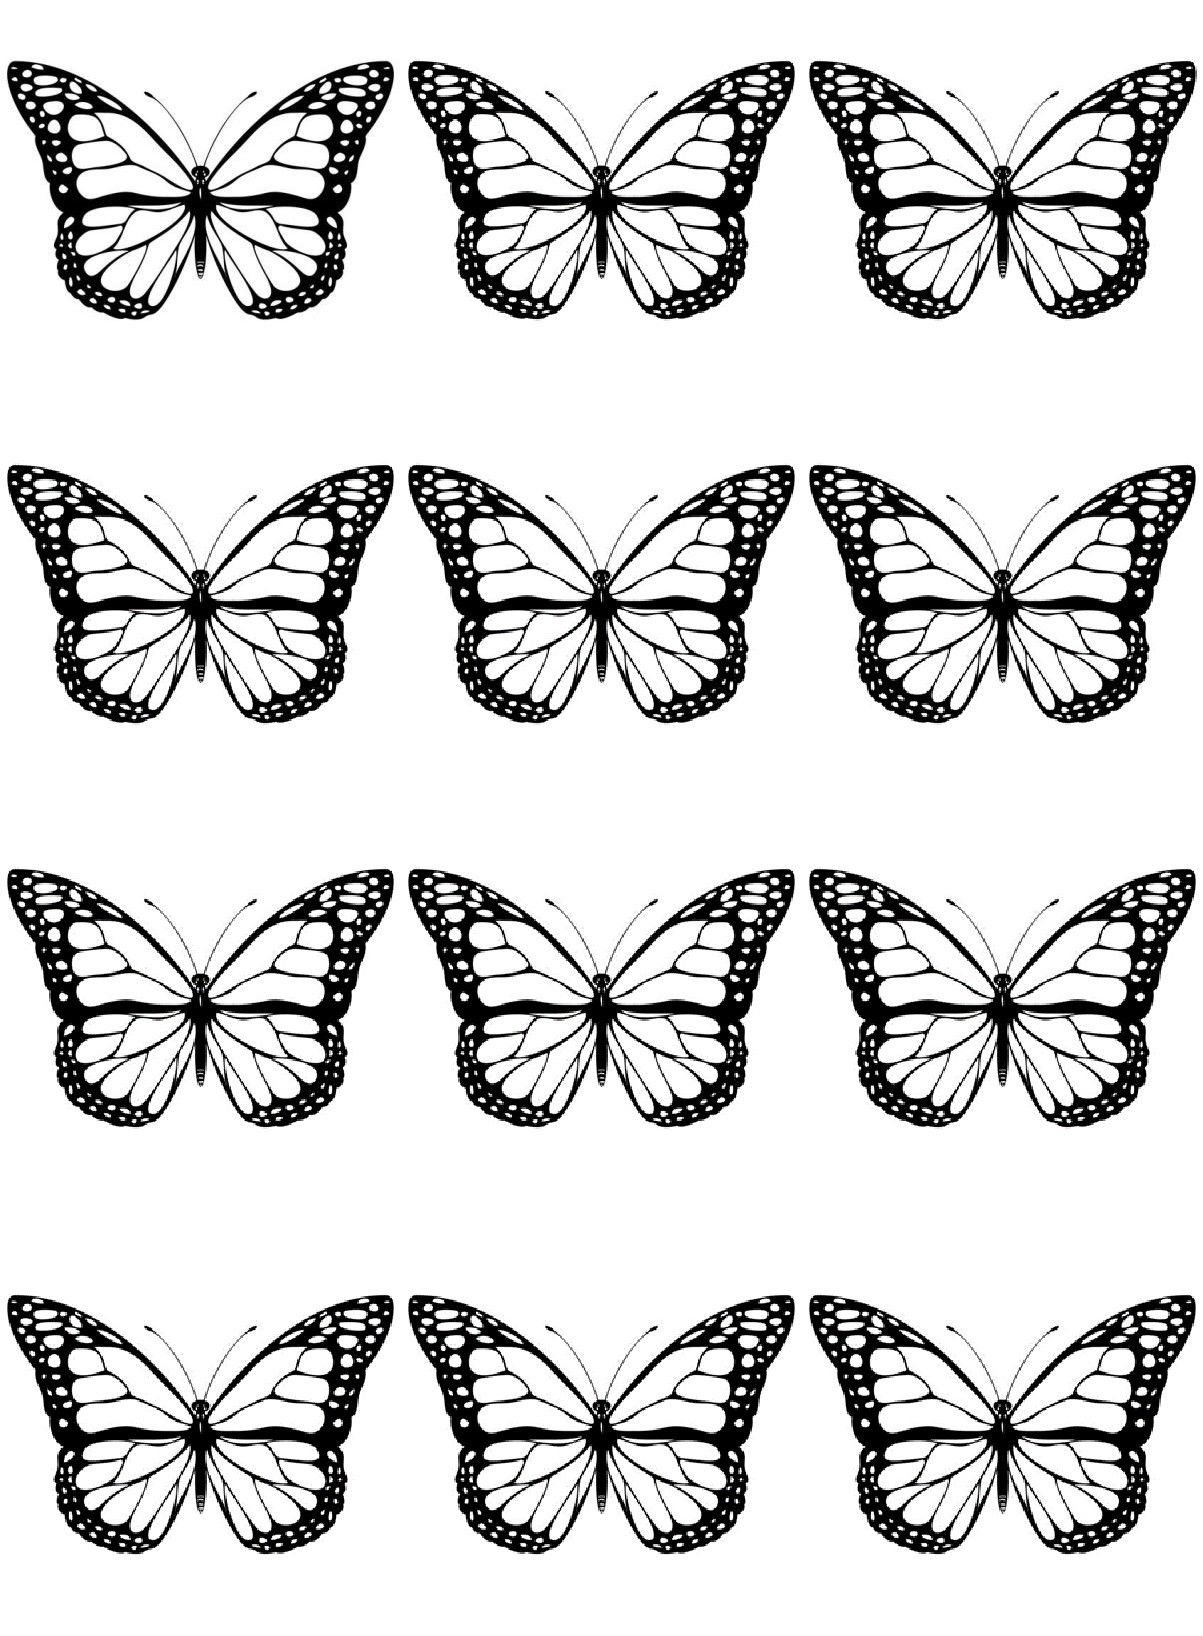 Шаблон бабочек для печати. Трафареты бабочек для декора. Бабочка шаблон для печати. Контуры бабочек для декора. Бабочка контур.